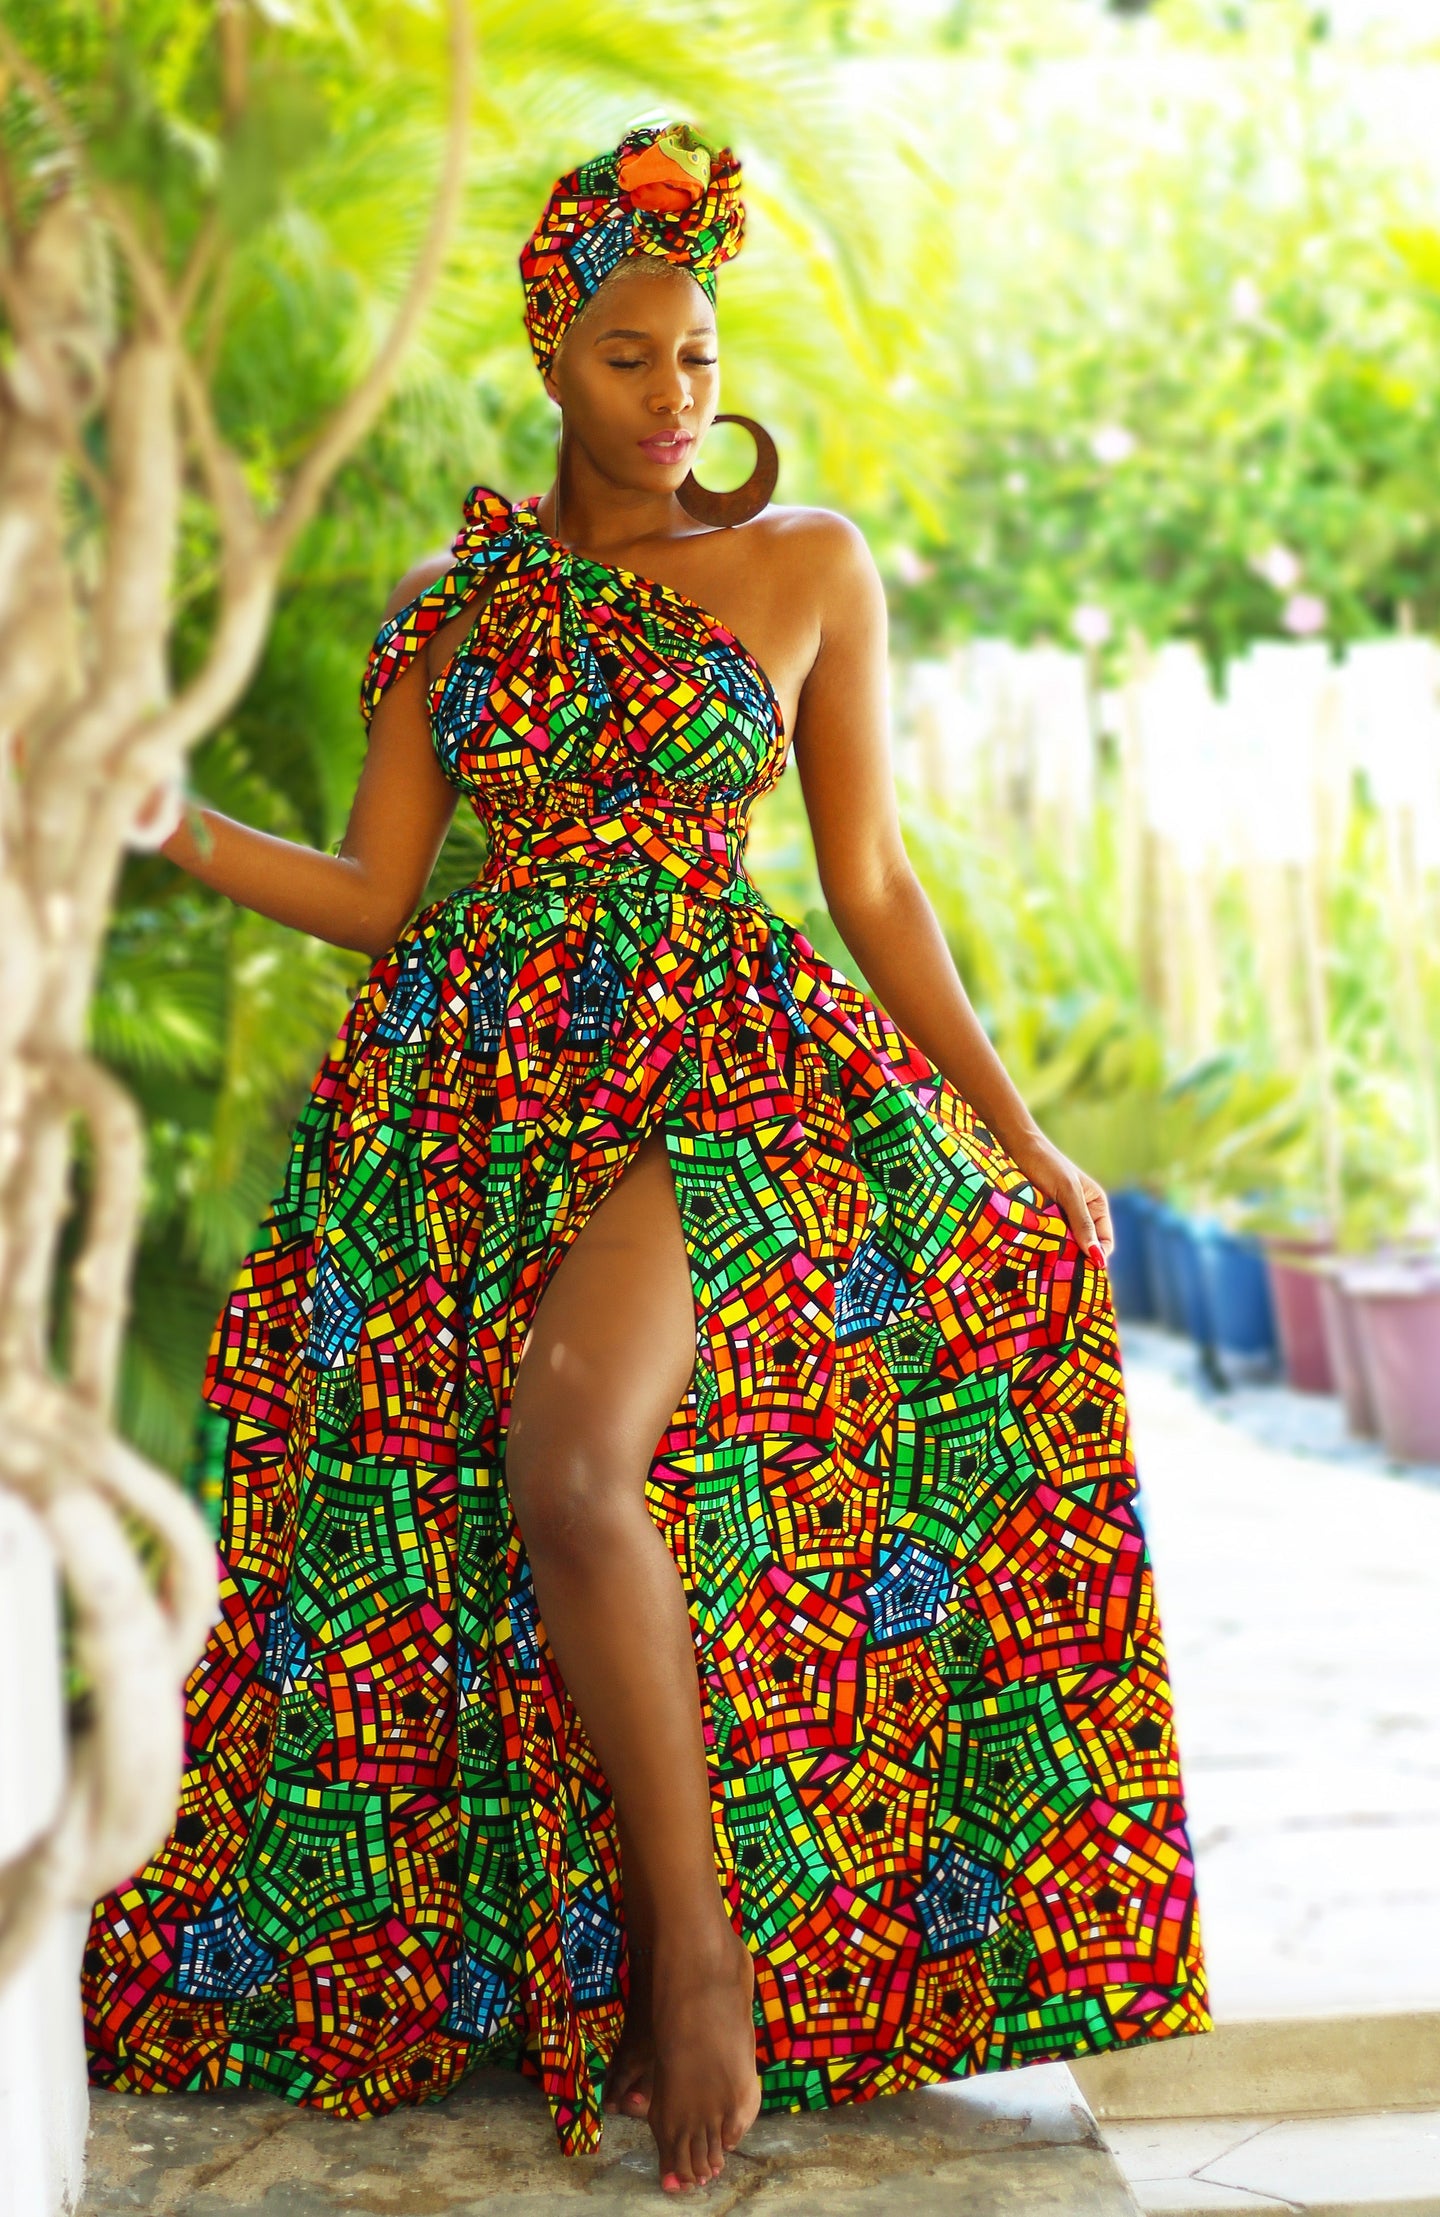 Wholesale Box of 10 African Print Belle Rainbow Infinity Dress